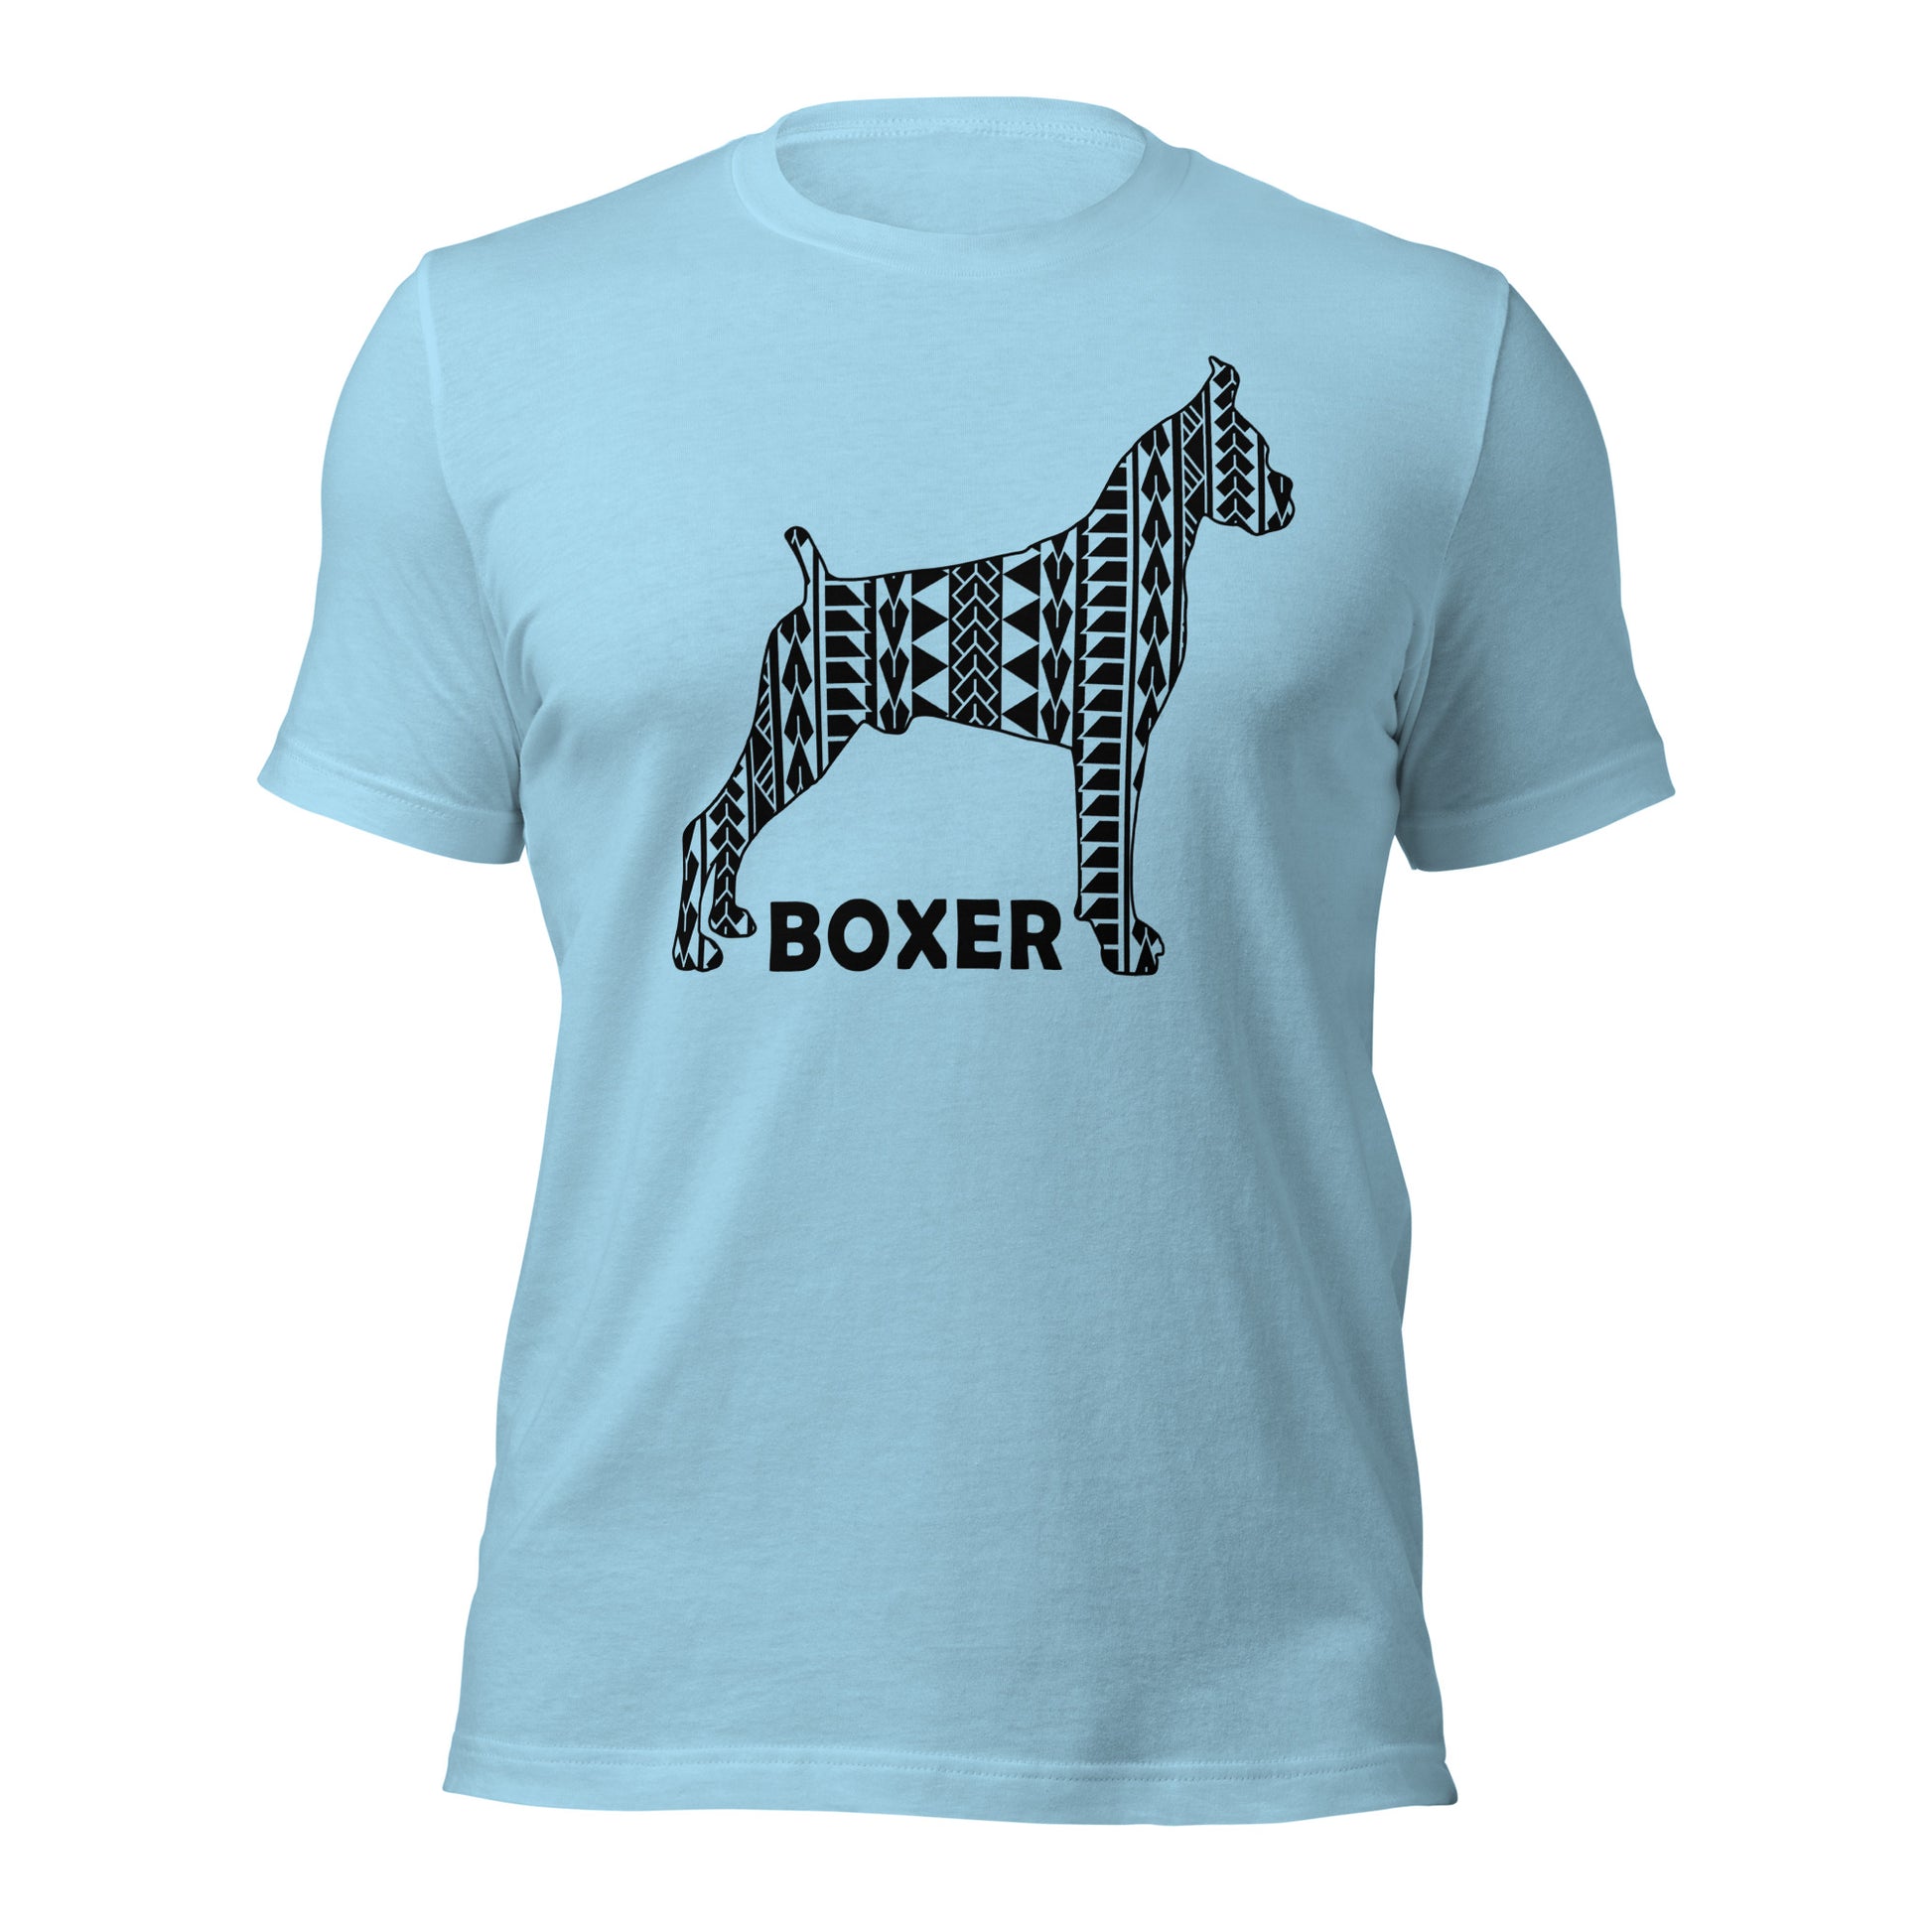 Boxer Polynesian t-shirt blue by Dog Artistry.